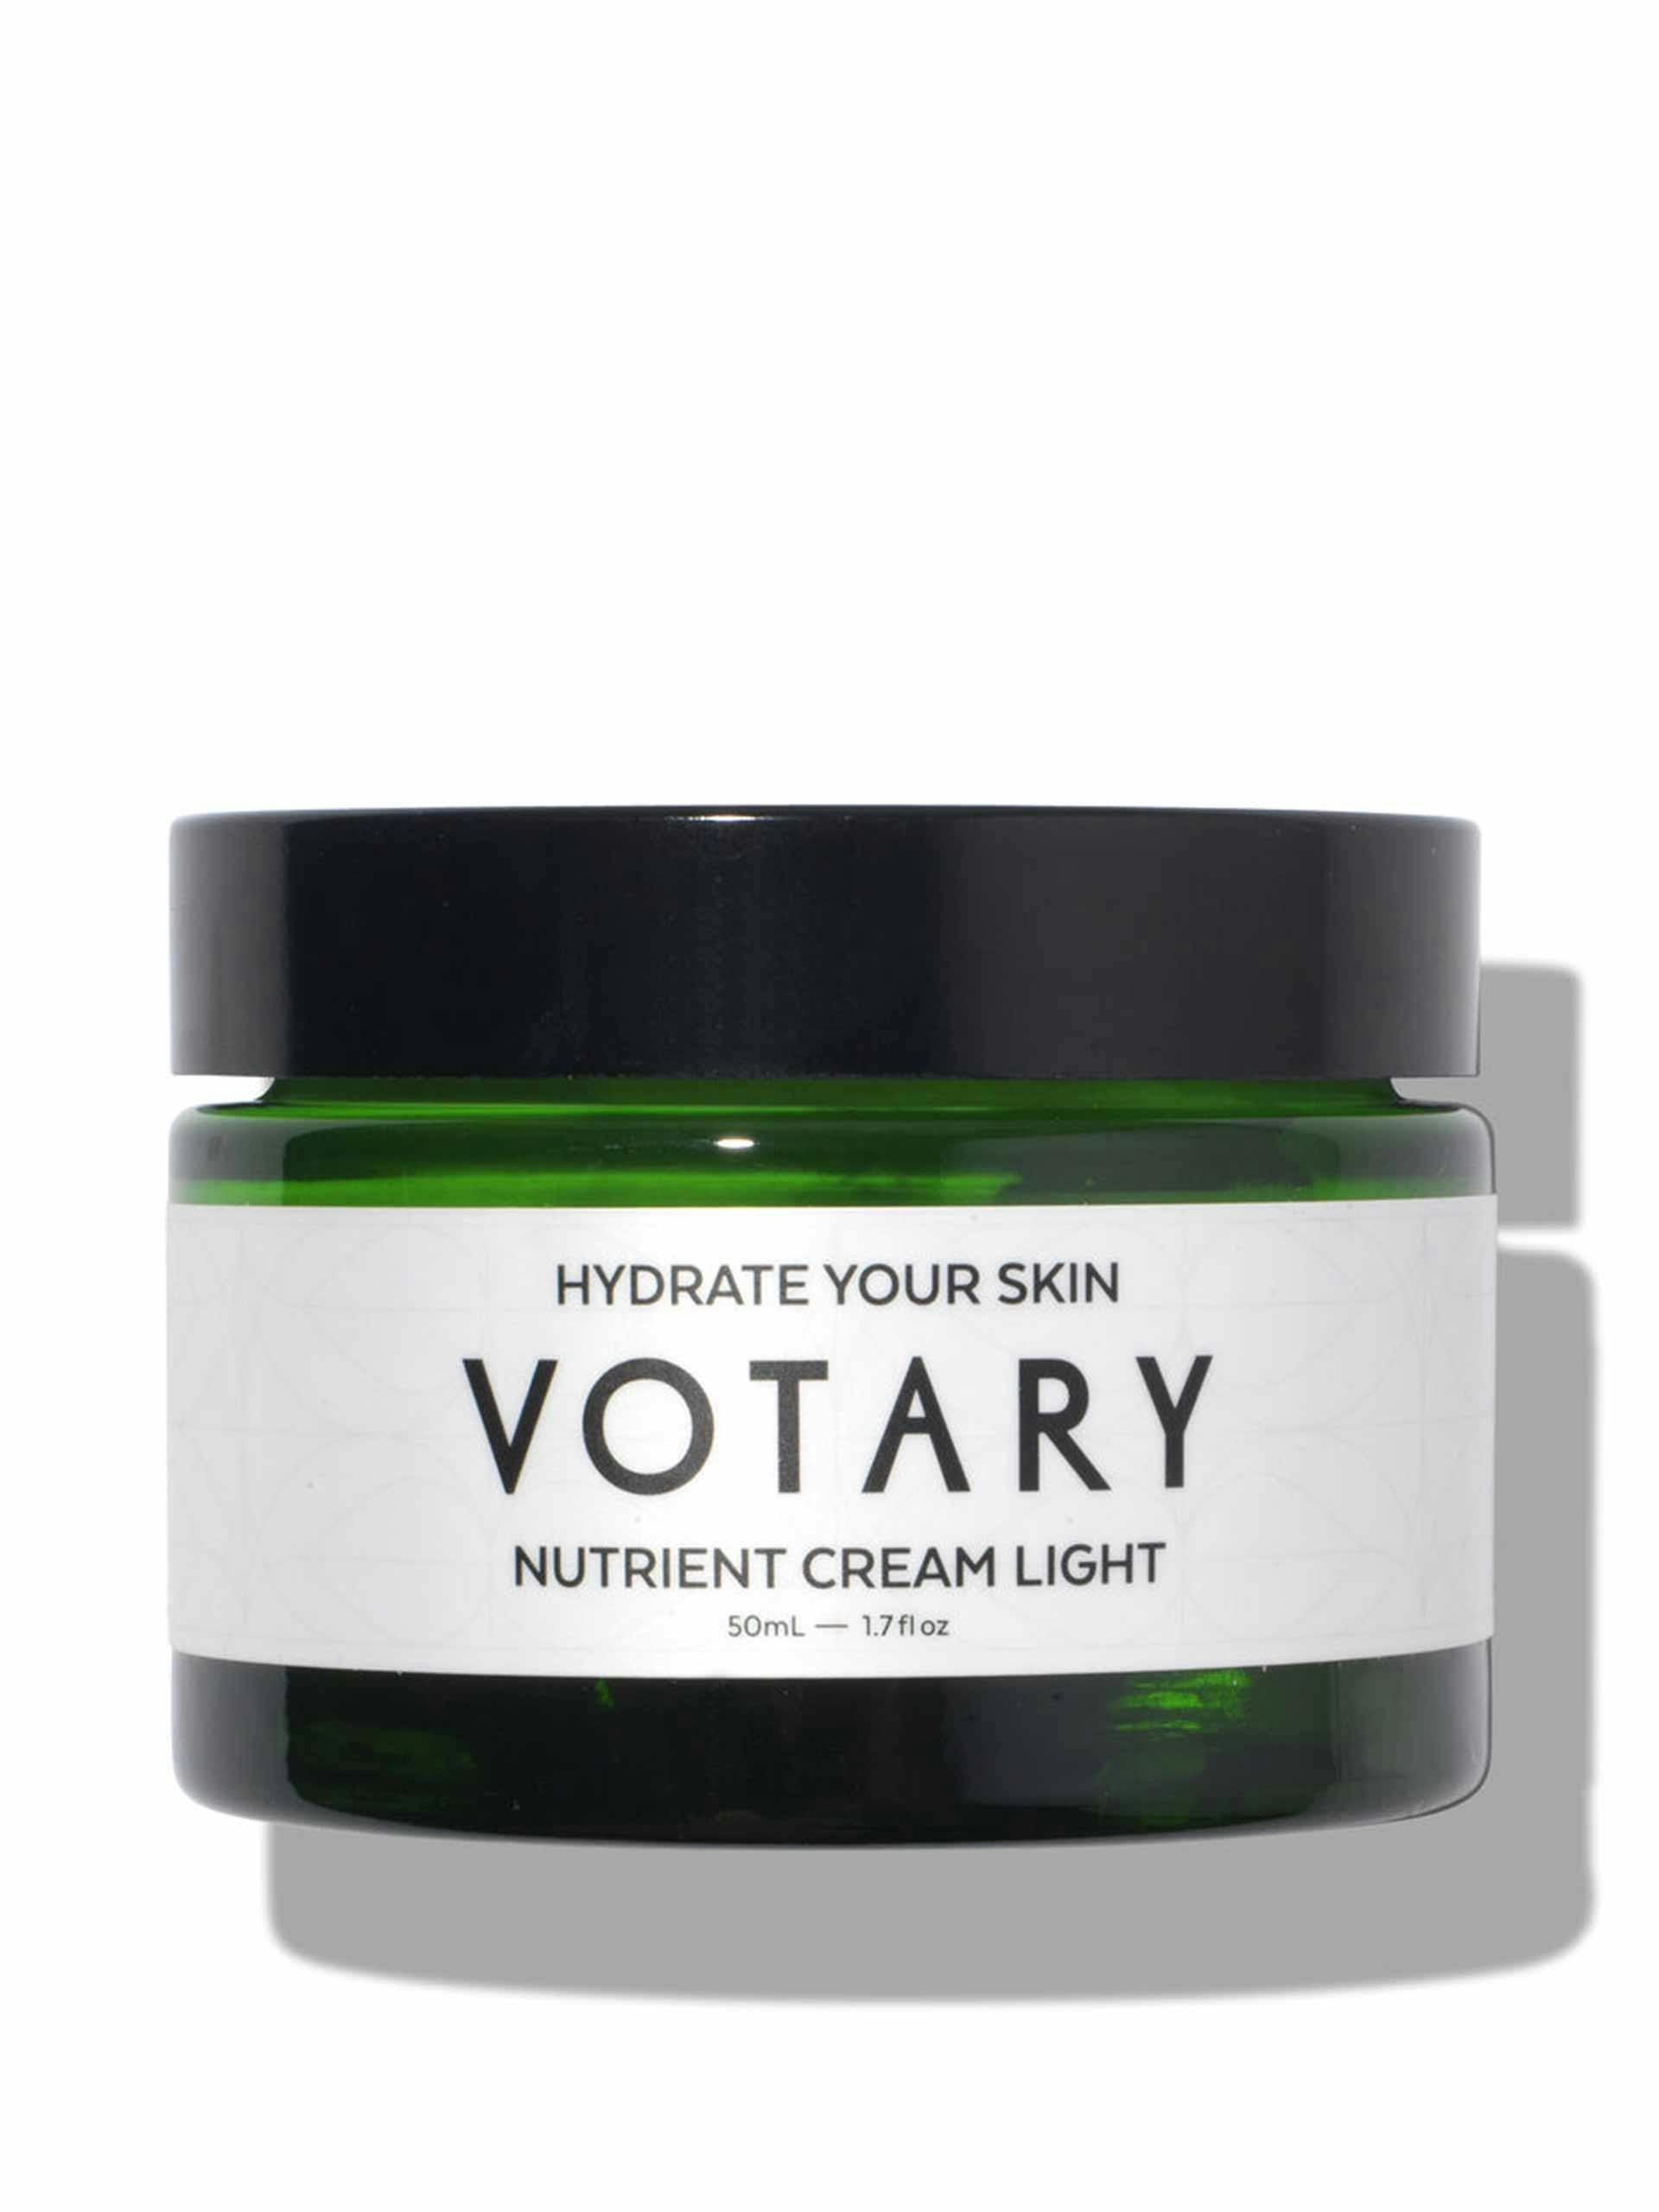 Lightweight hydrating nutrient cream